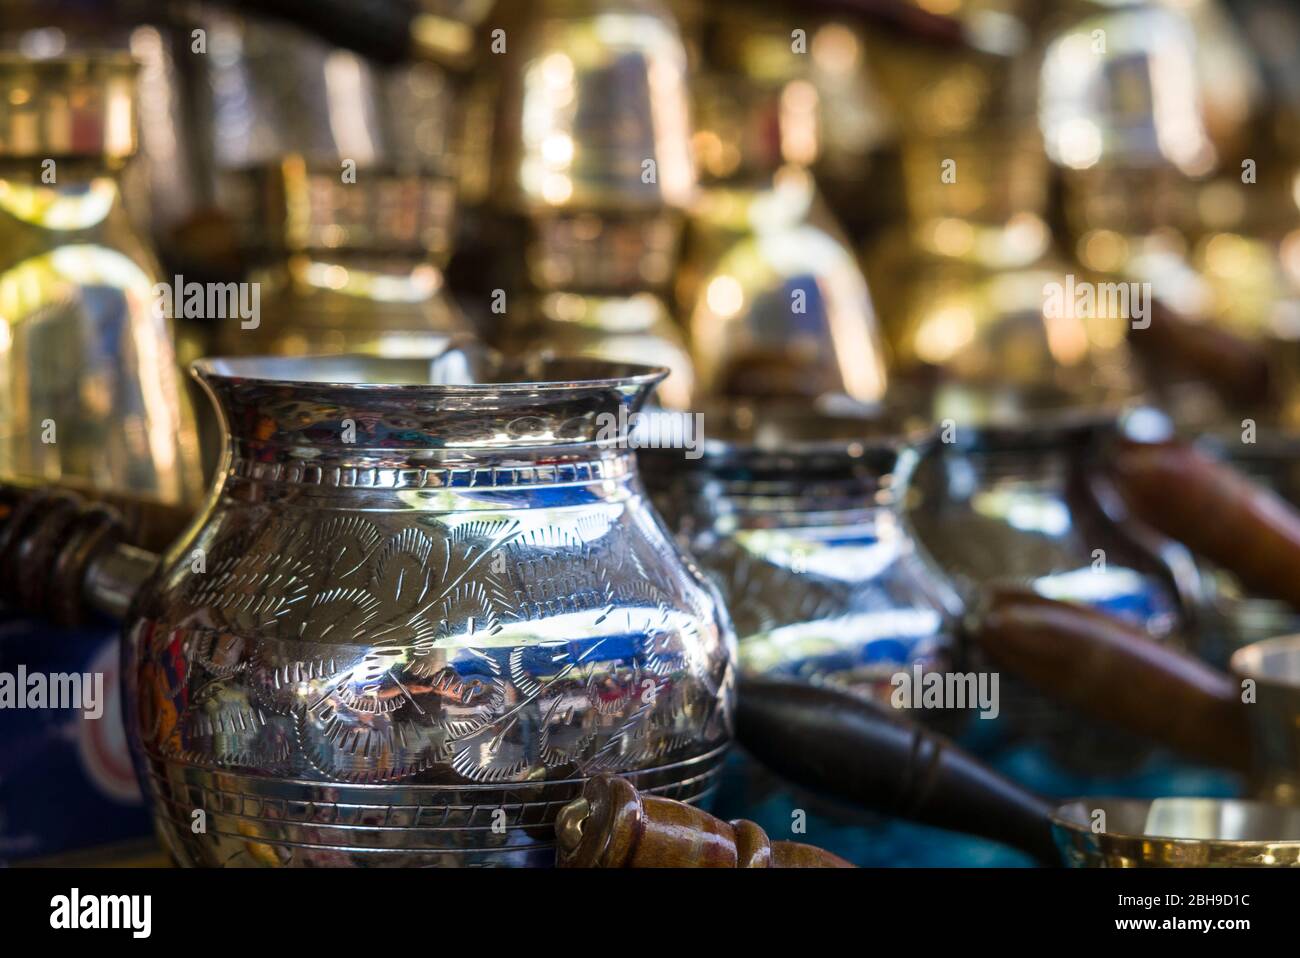 Armenia, Yerevan, Vernissage Market, traditional coffee makers Stock Photo